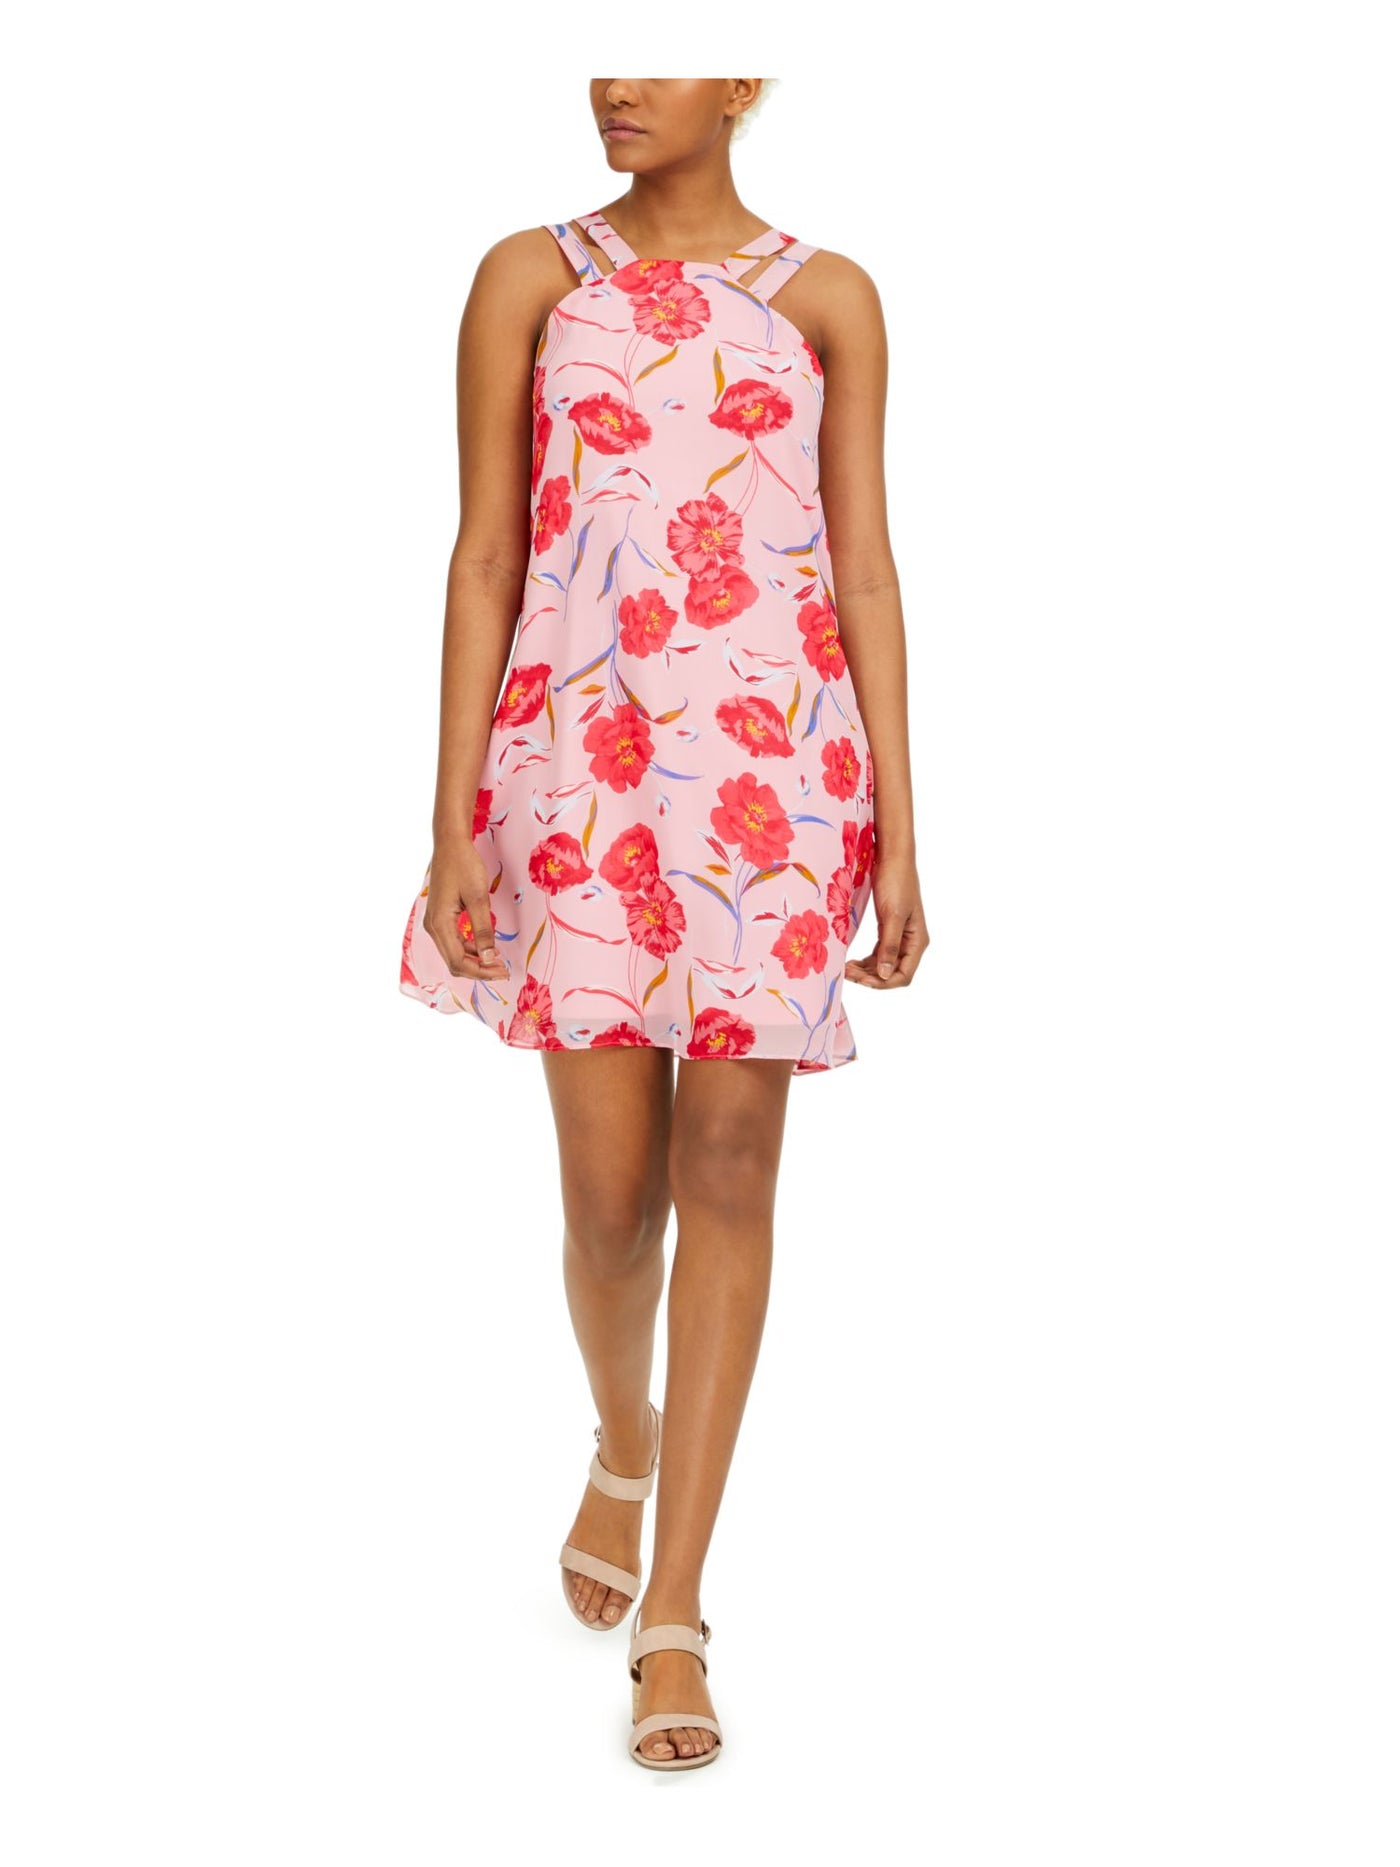 BAR III DRESSES Womens Pink Sheer Lined Floral Sleeveless Square Neck Mini Evening Shift Dress Juniors S